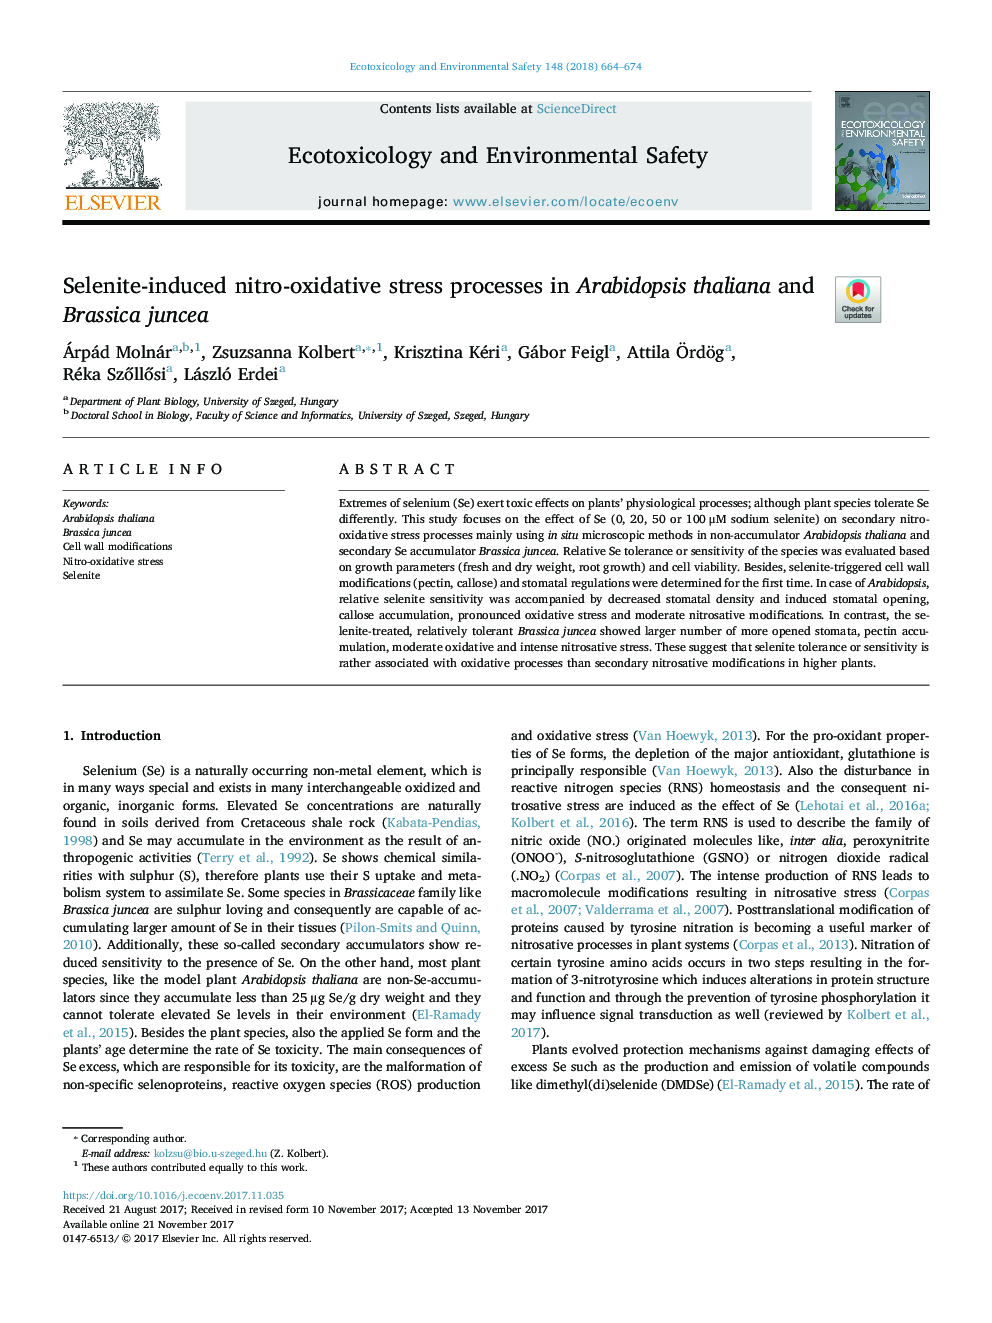 Selenite-induced nitro-oxidative stress processes in Arabidopsis thaliana and Brassica juncea